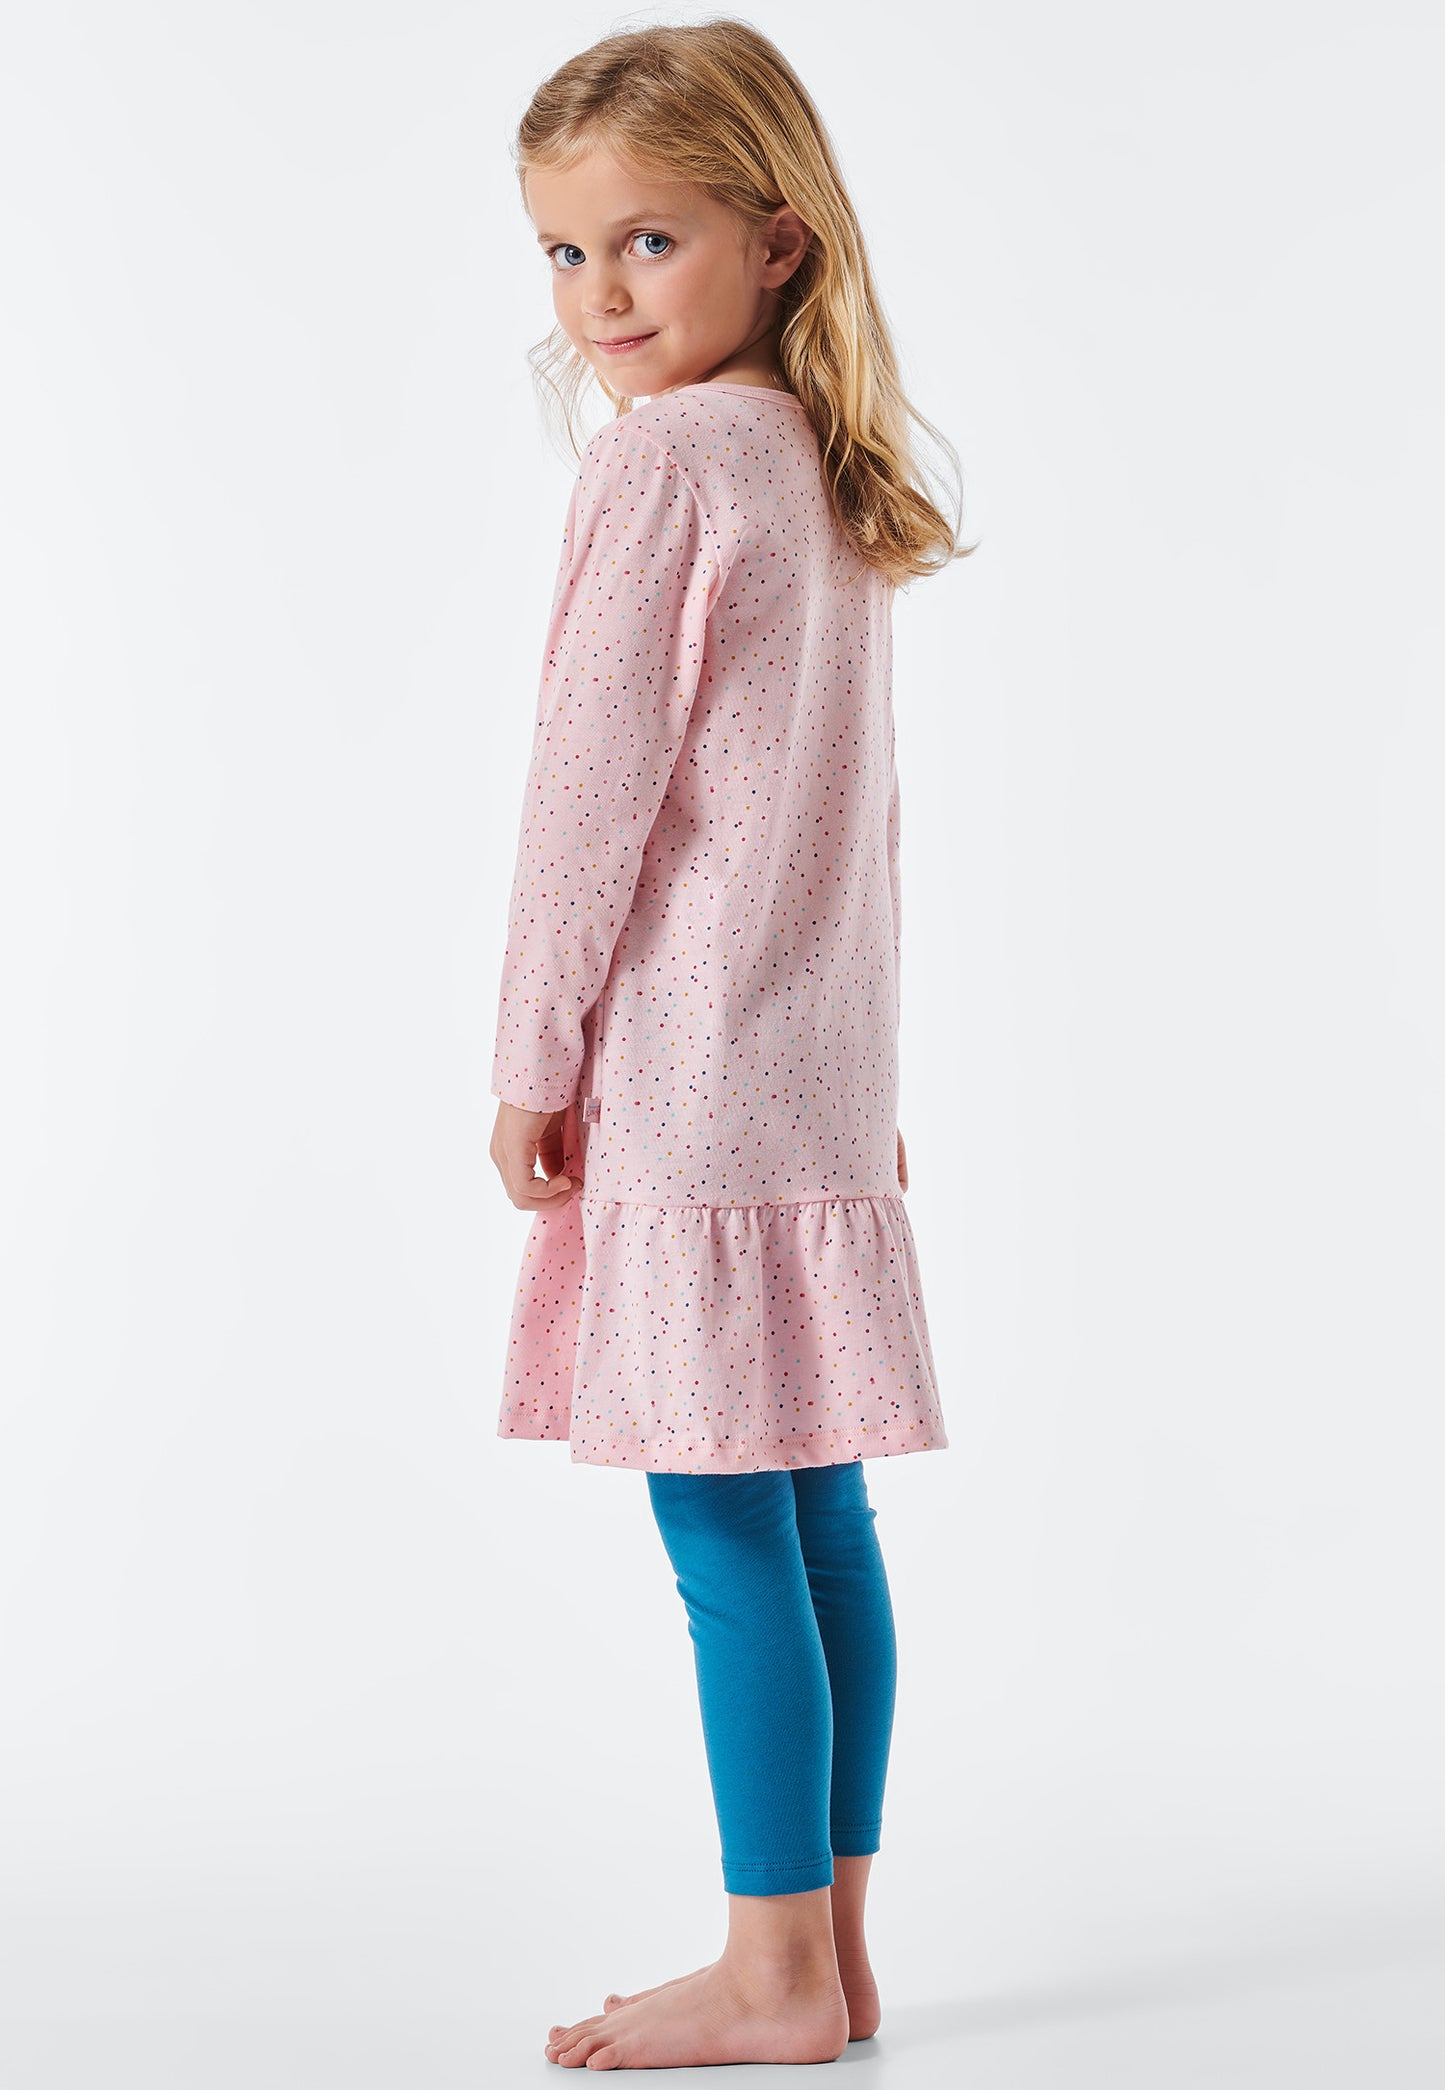 Pyjama long coton bio volants effet doré pois rose - Princesse Lillifee